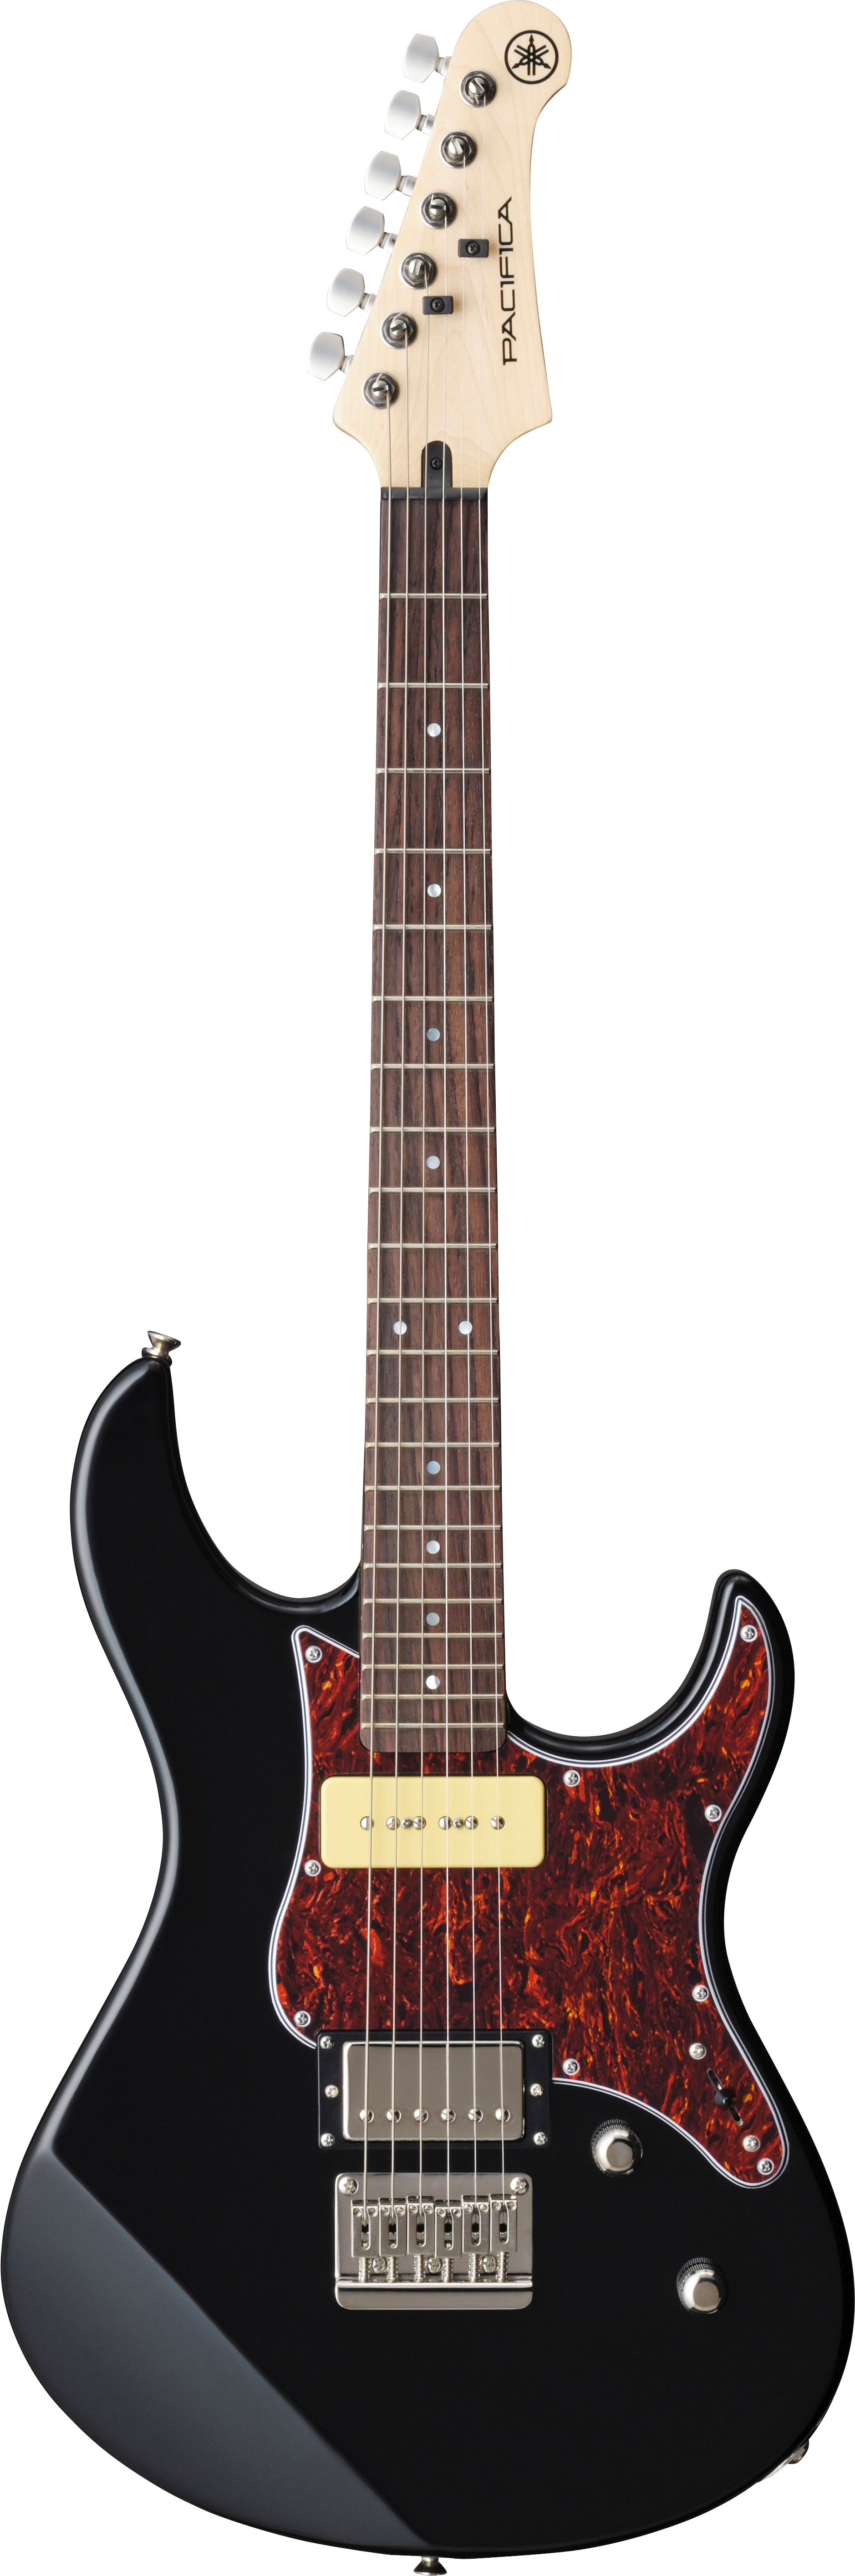 Yamaha Pacifica Pac311h Hs Ht Rw - Black - Str shape electric guitar - Variation 4